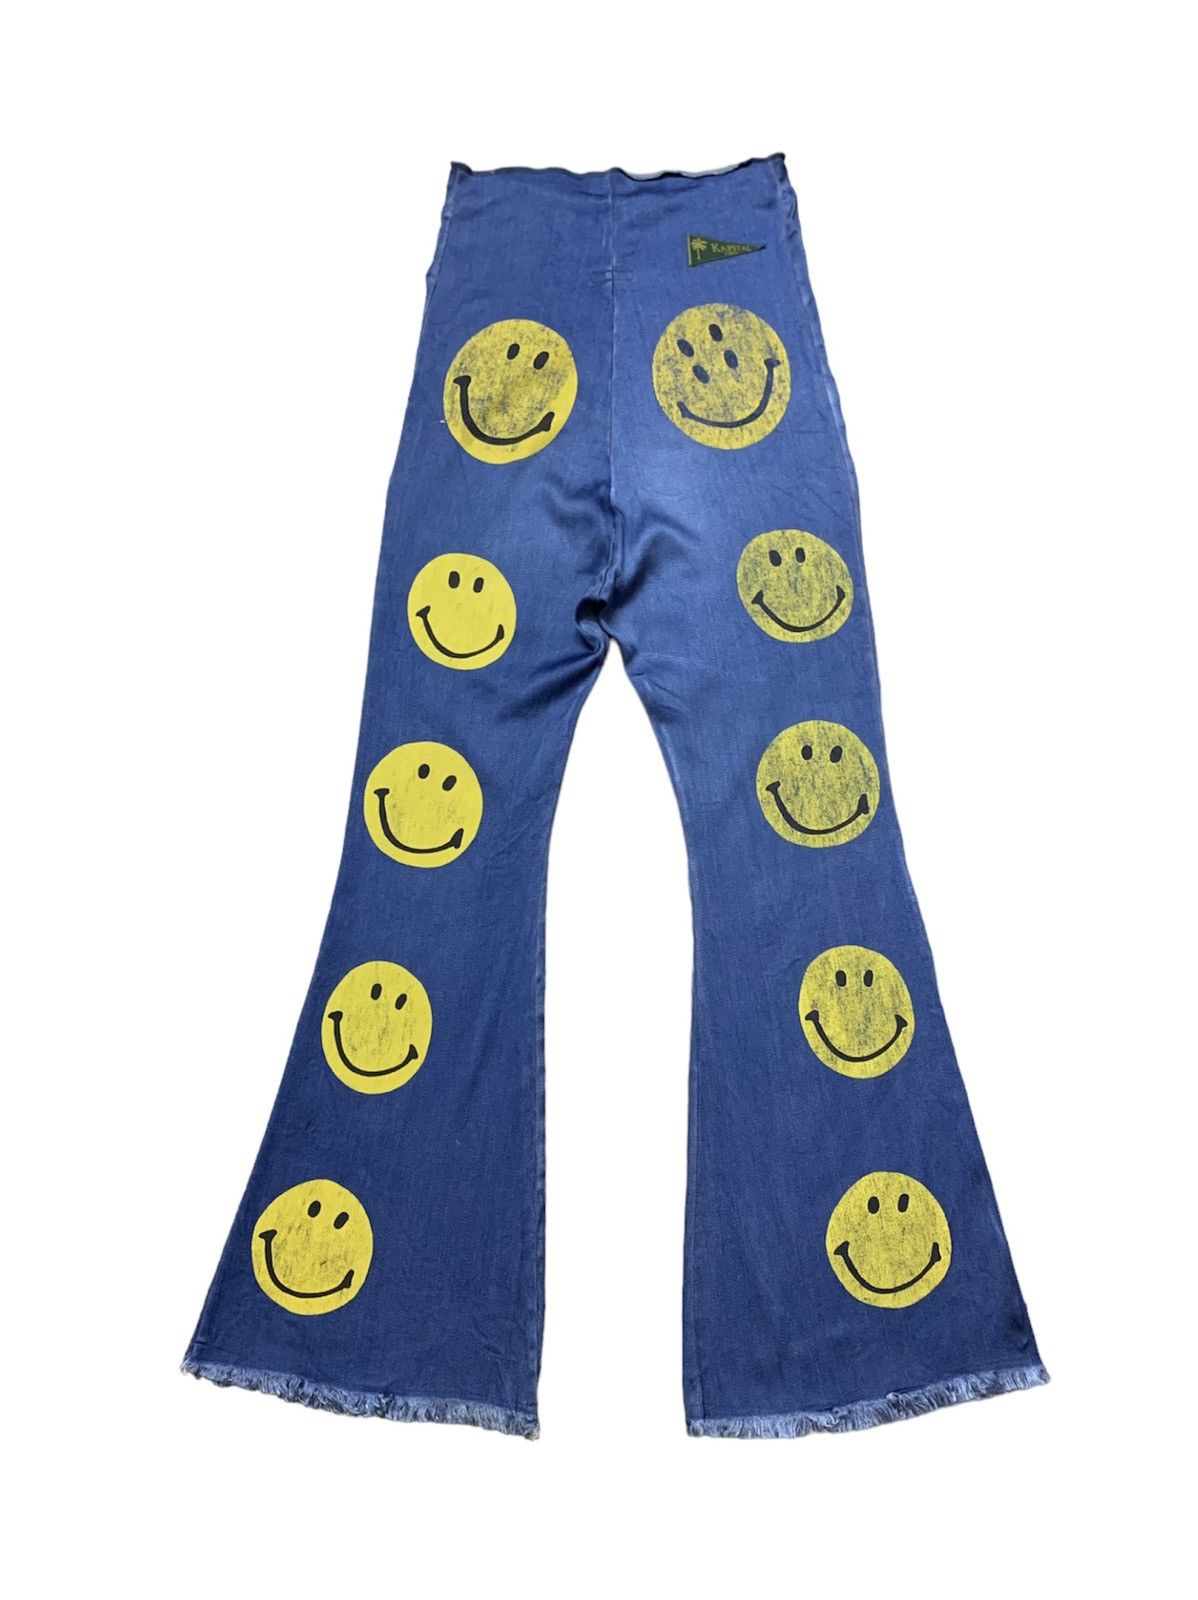 Kapital FLARE KAPITAL SMILEY STRETCHABLE LEGGINGS PANTS Size US 31 - 1 Preview